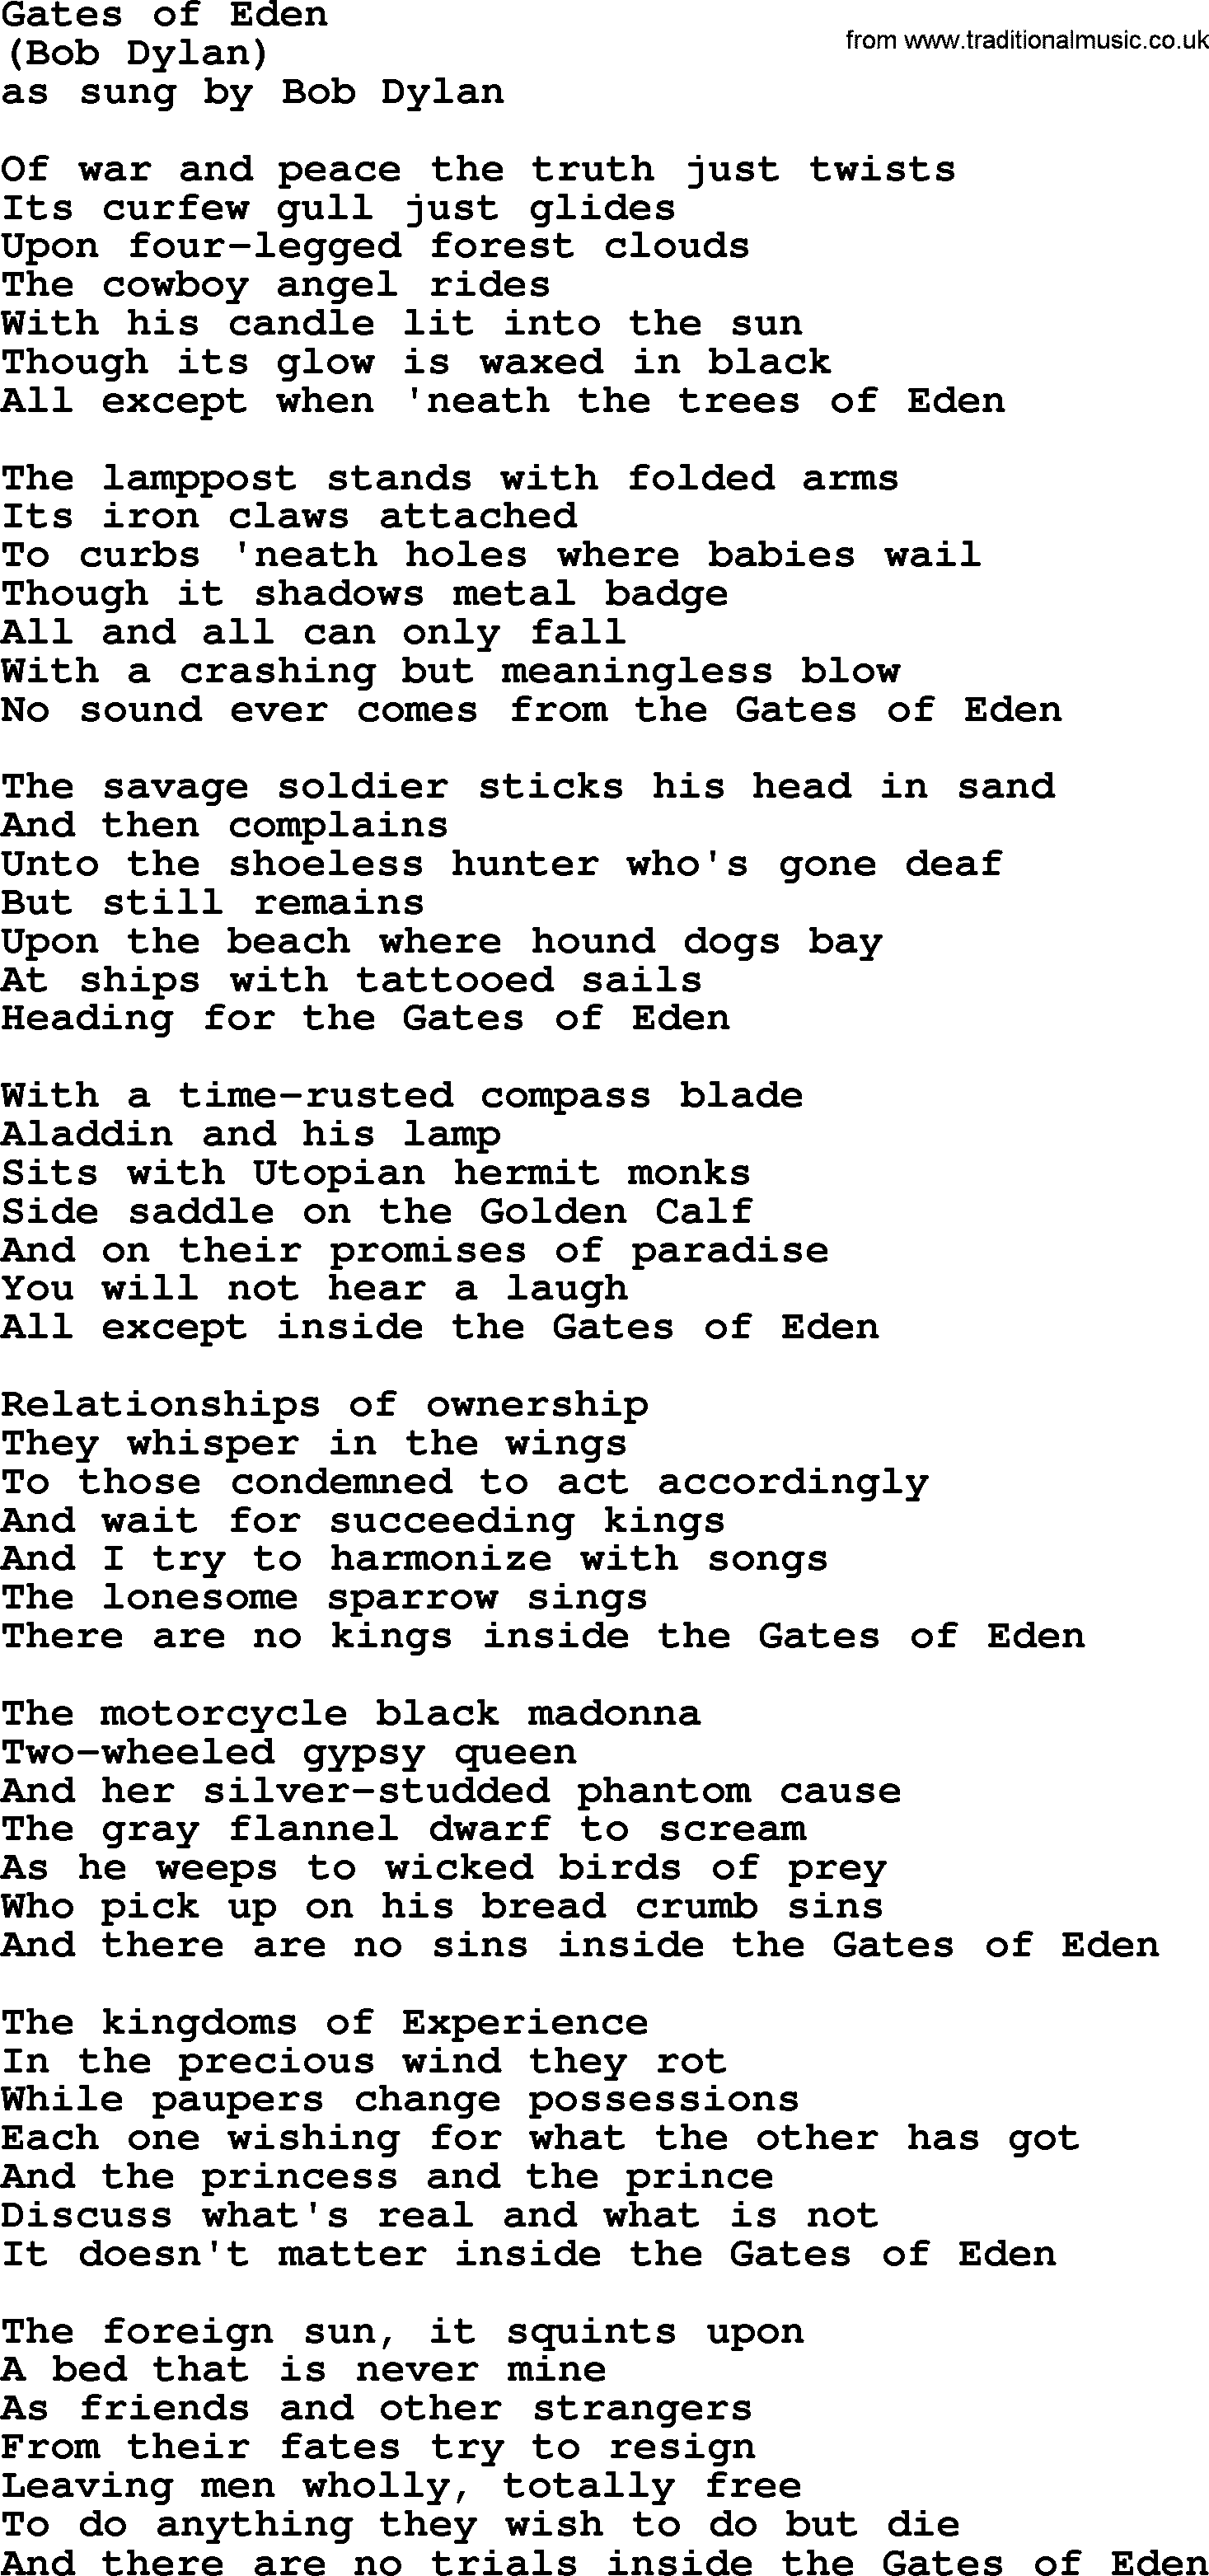 The Byrds song Gates Of Eden, lyrics